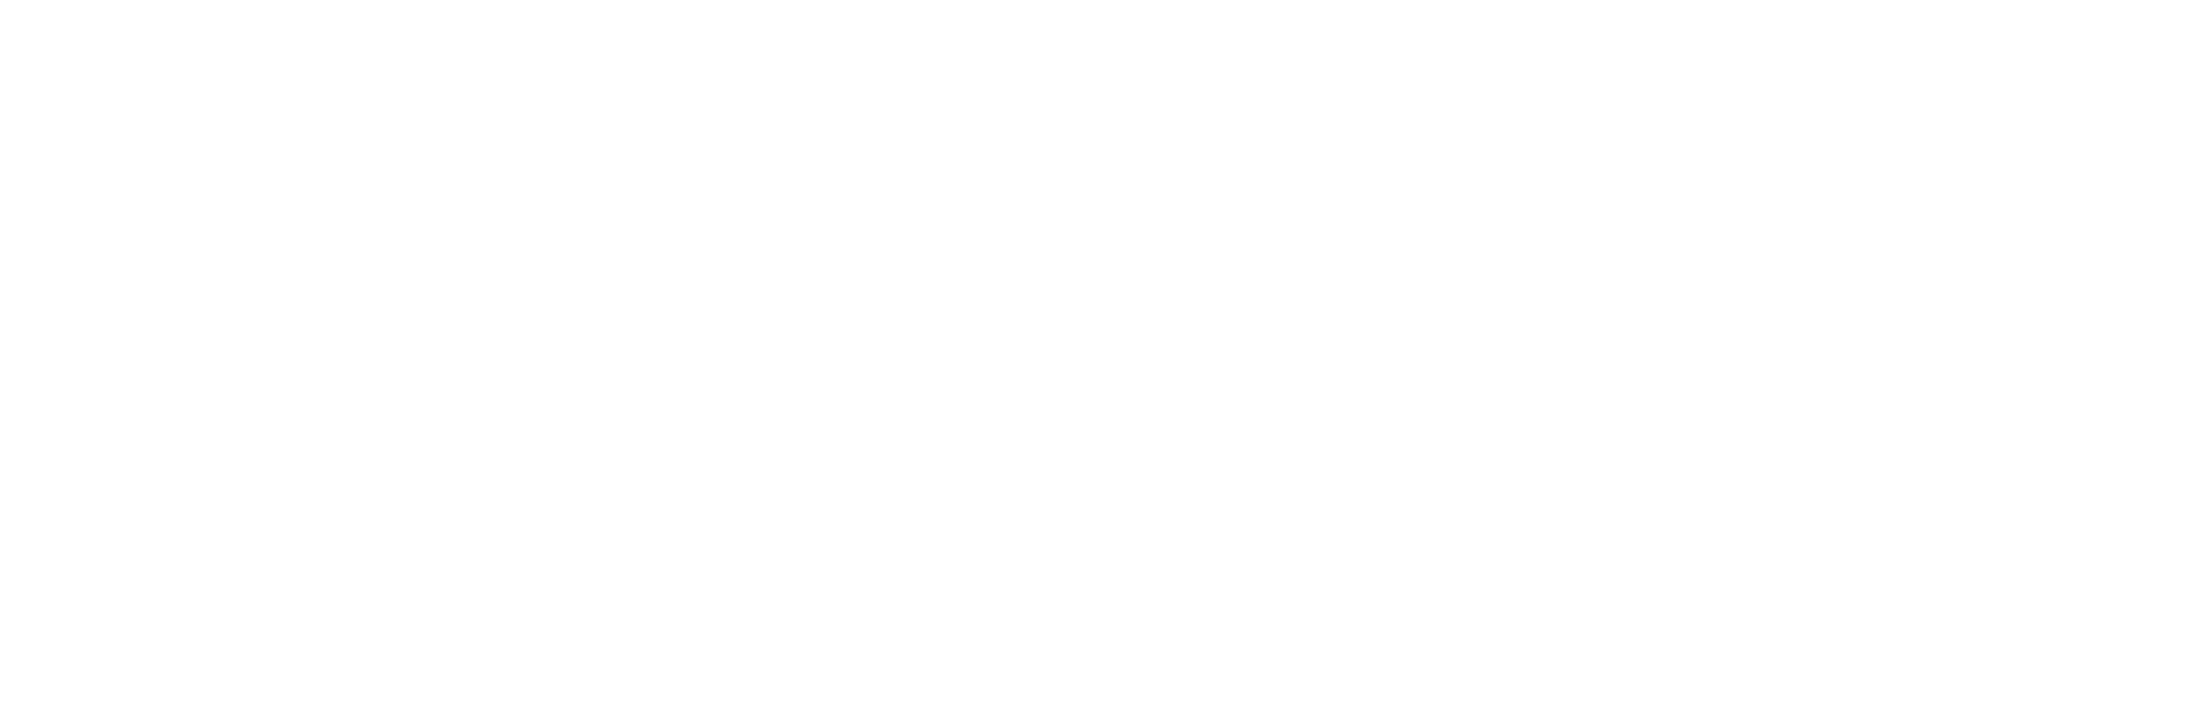 Logo de capita blanc